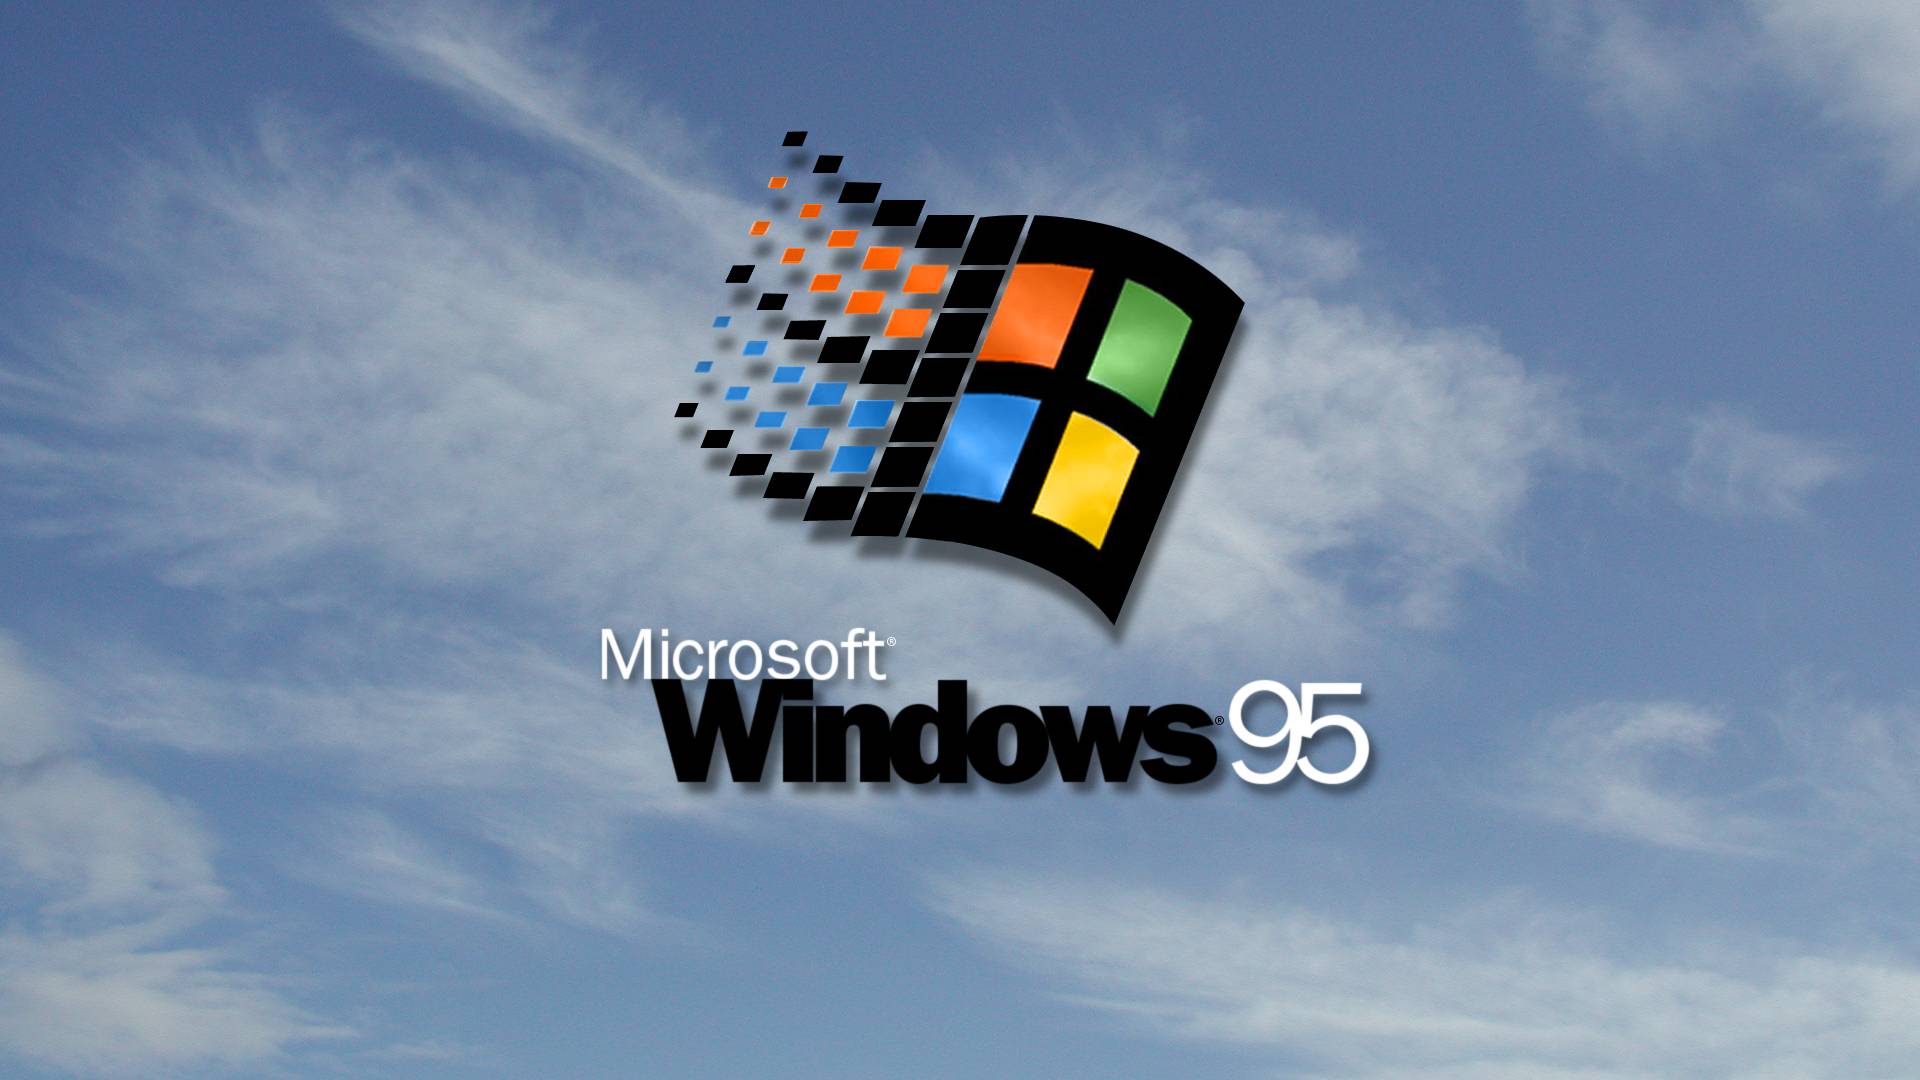 Windows 95 wallpaper, Windows 95 background, Windows 95 desktop wallpaper, Windows 95 images, Windows 95 pictures, Windows 95 photos, Windows 95 backgrounds, Windows 95 wallpapers, Windows 95 backgrounds, Windows 95 images, Windows 95 pictures, Windows 95 photos - Windows 95